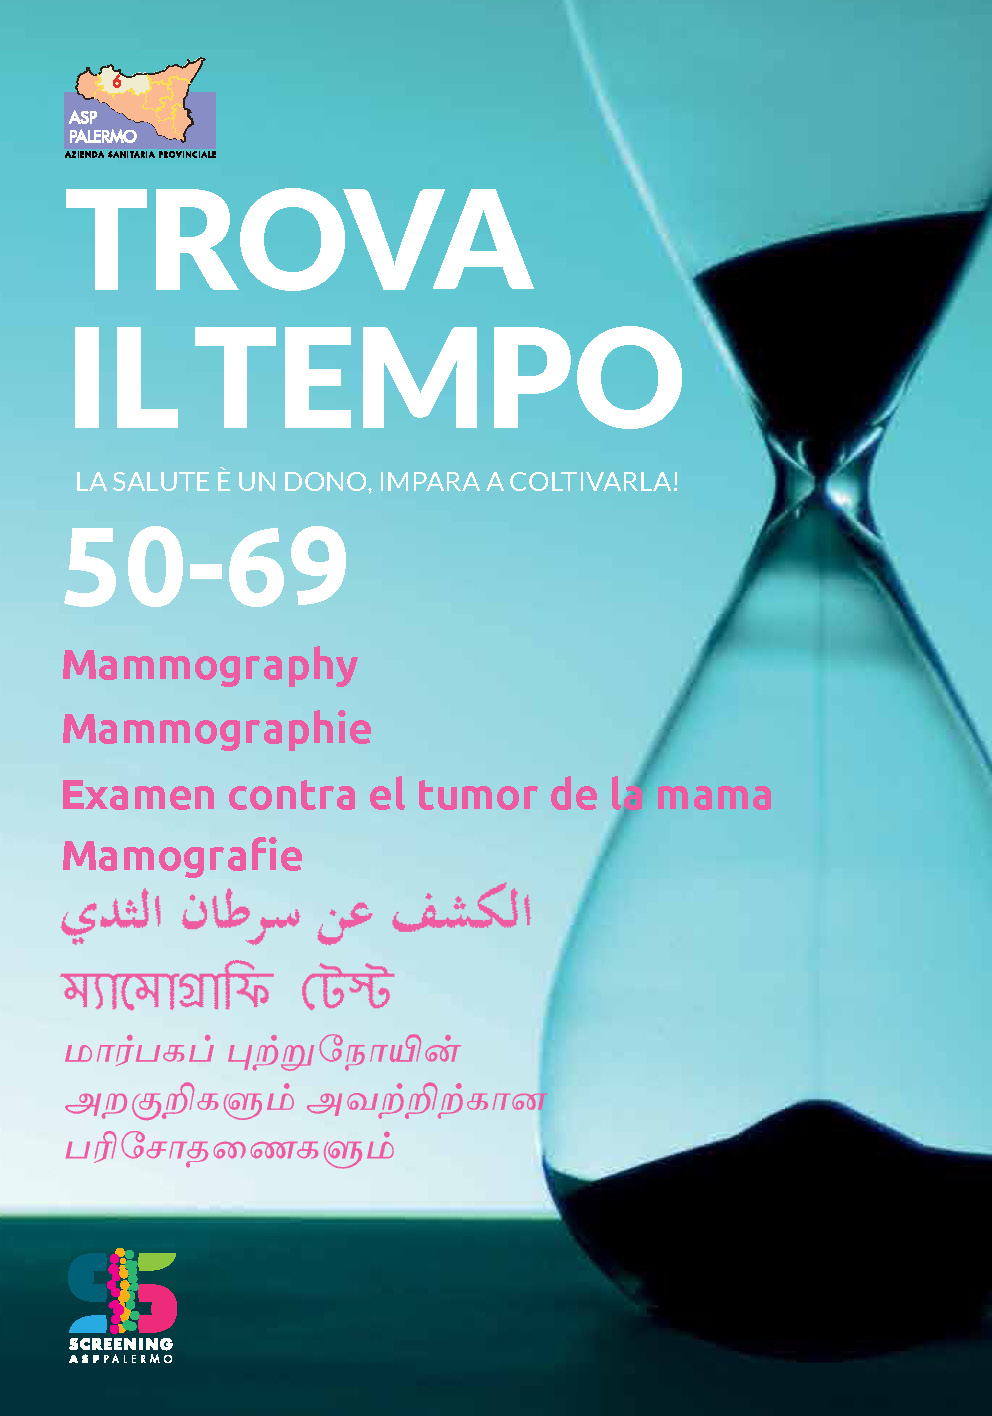 copertina brochure screening mammografico multilingual